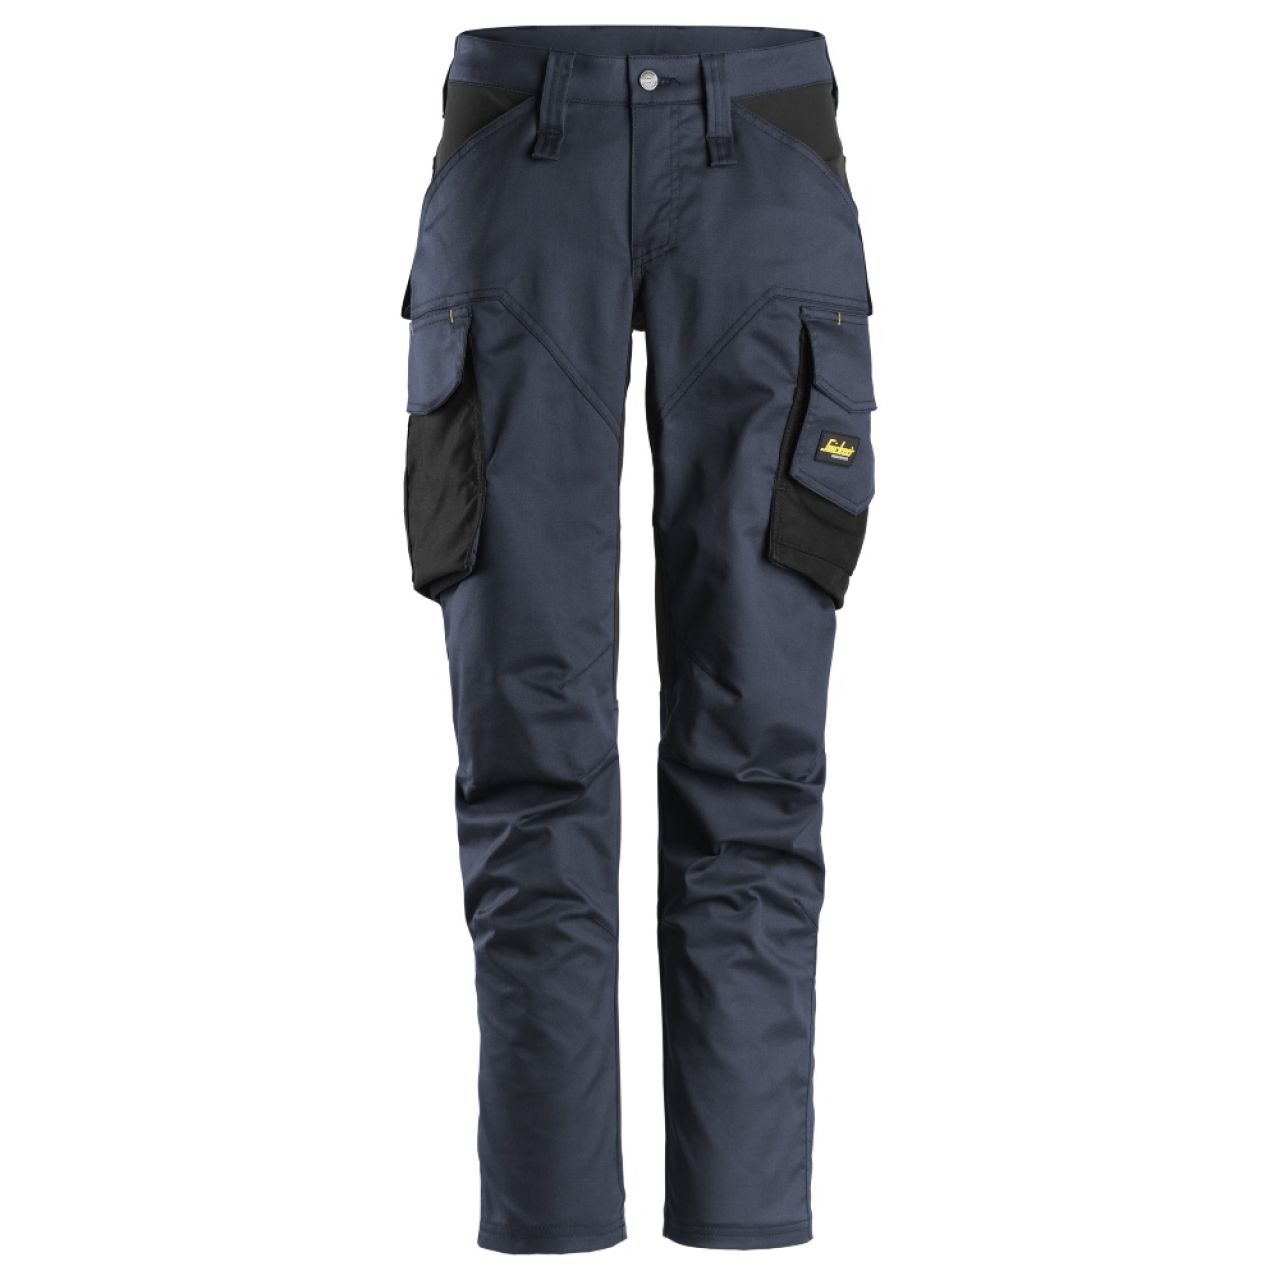 6703 Pantalones largos de trabajo elásticos para mujer con bolsillos para rodilleras AllroundWork azul marino-negro talla 80